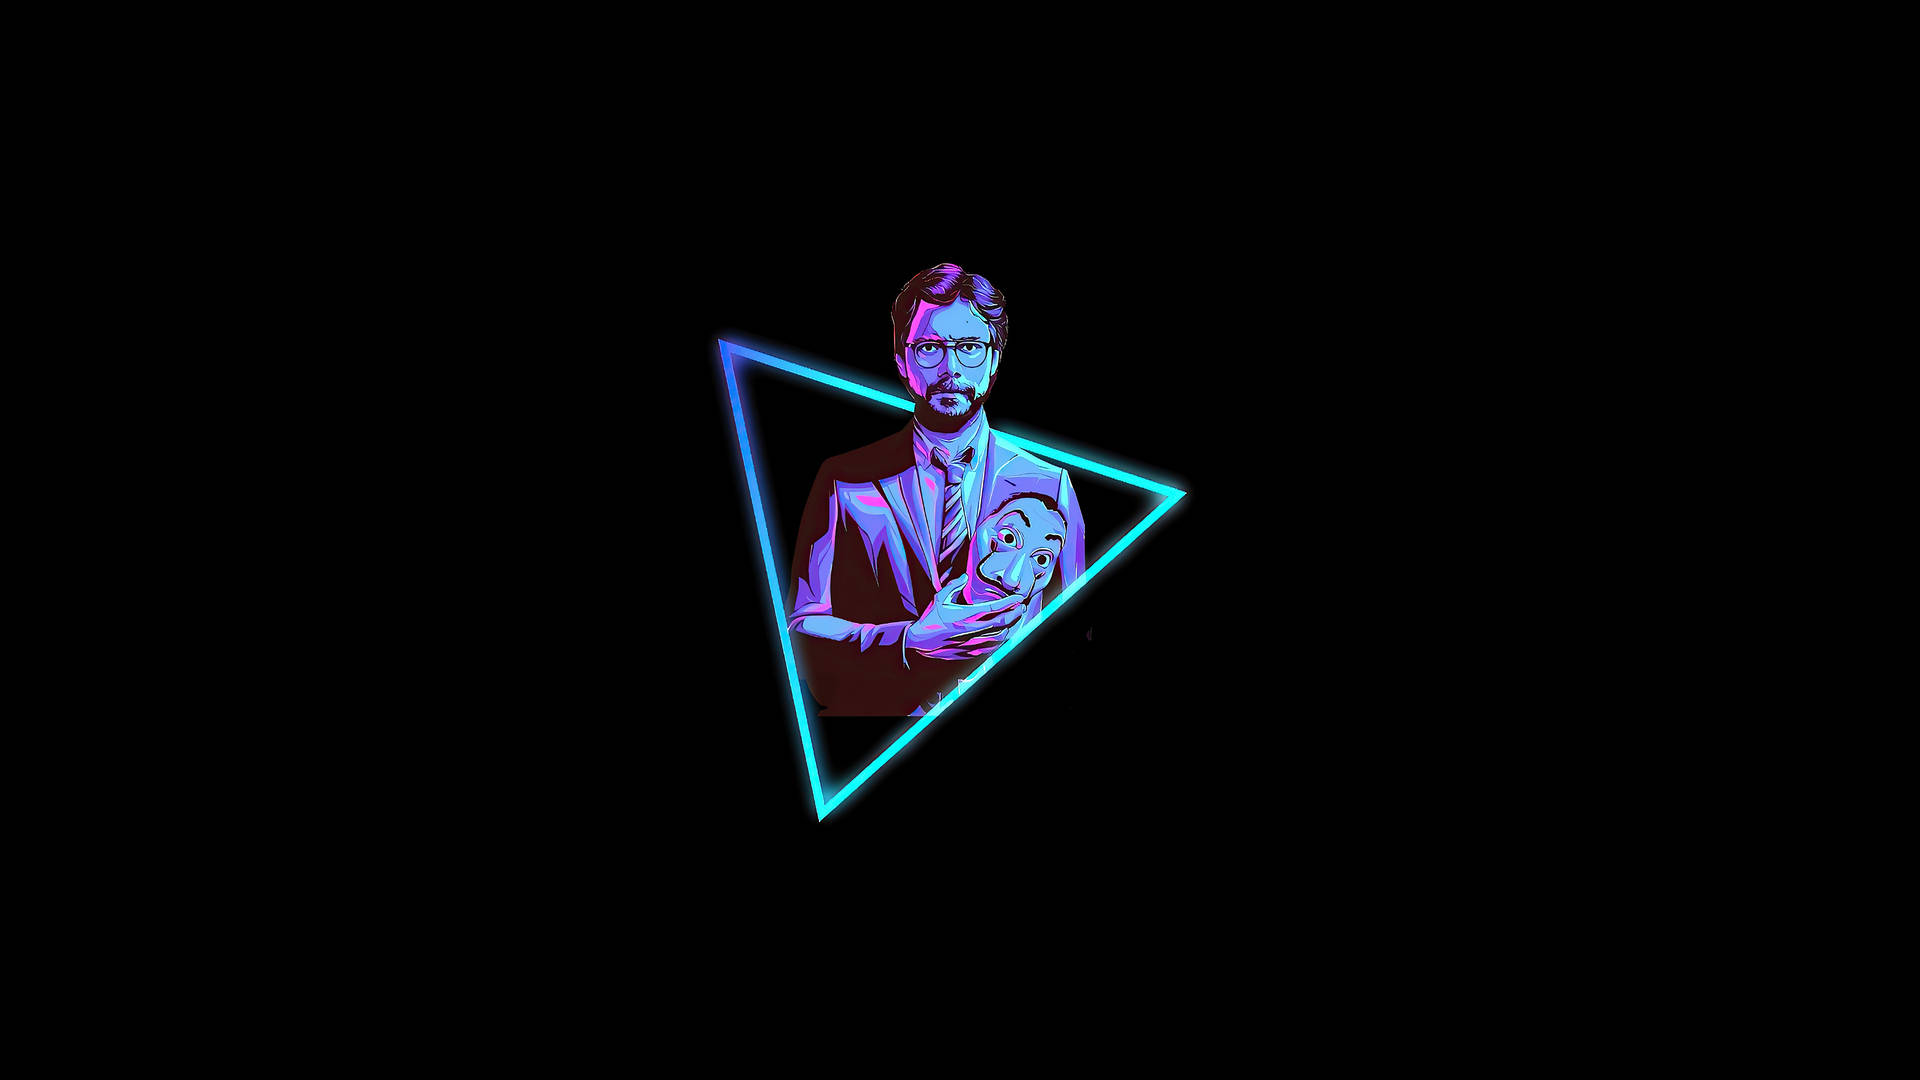 Professor Money Heist In Minimalistic Neon Background